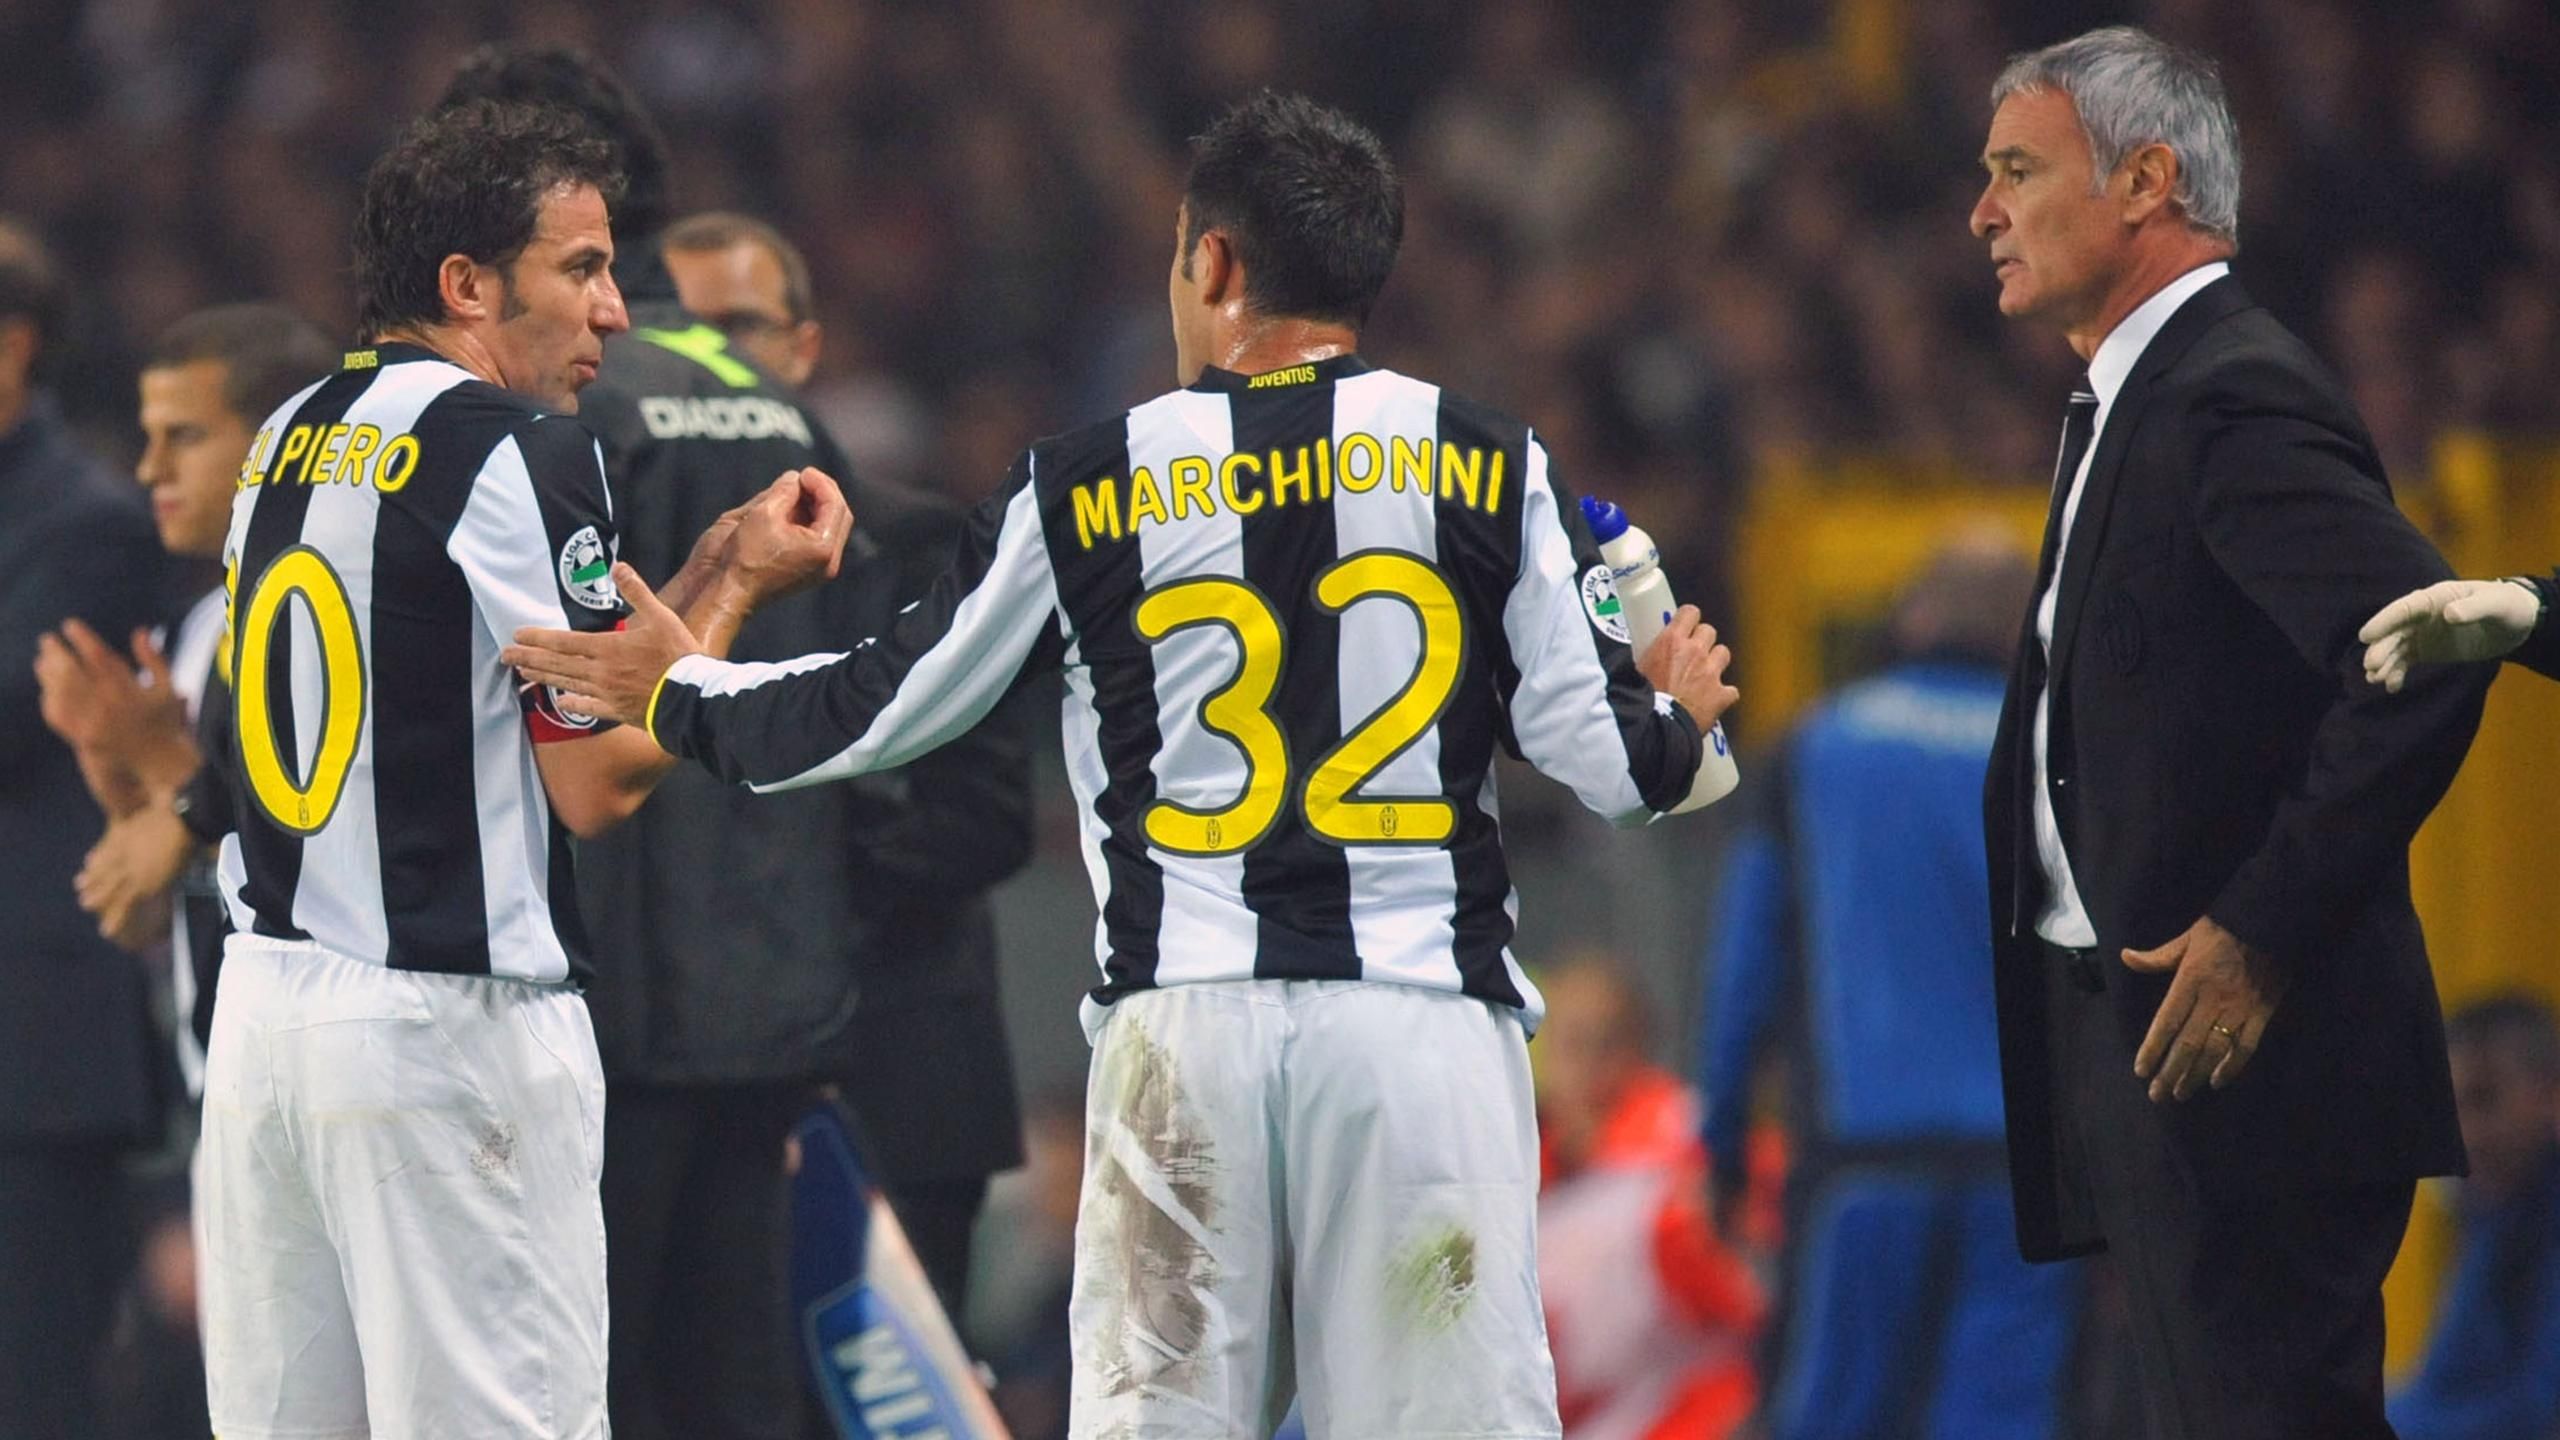 Marchionni wants Juve stay - Eurosport